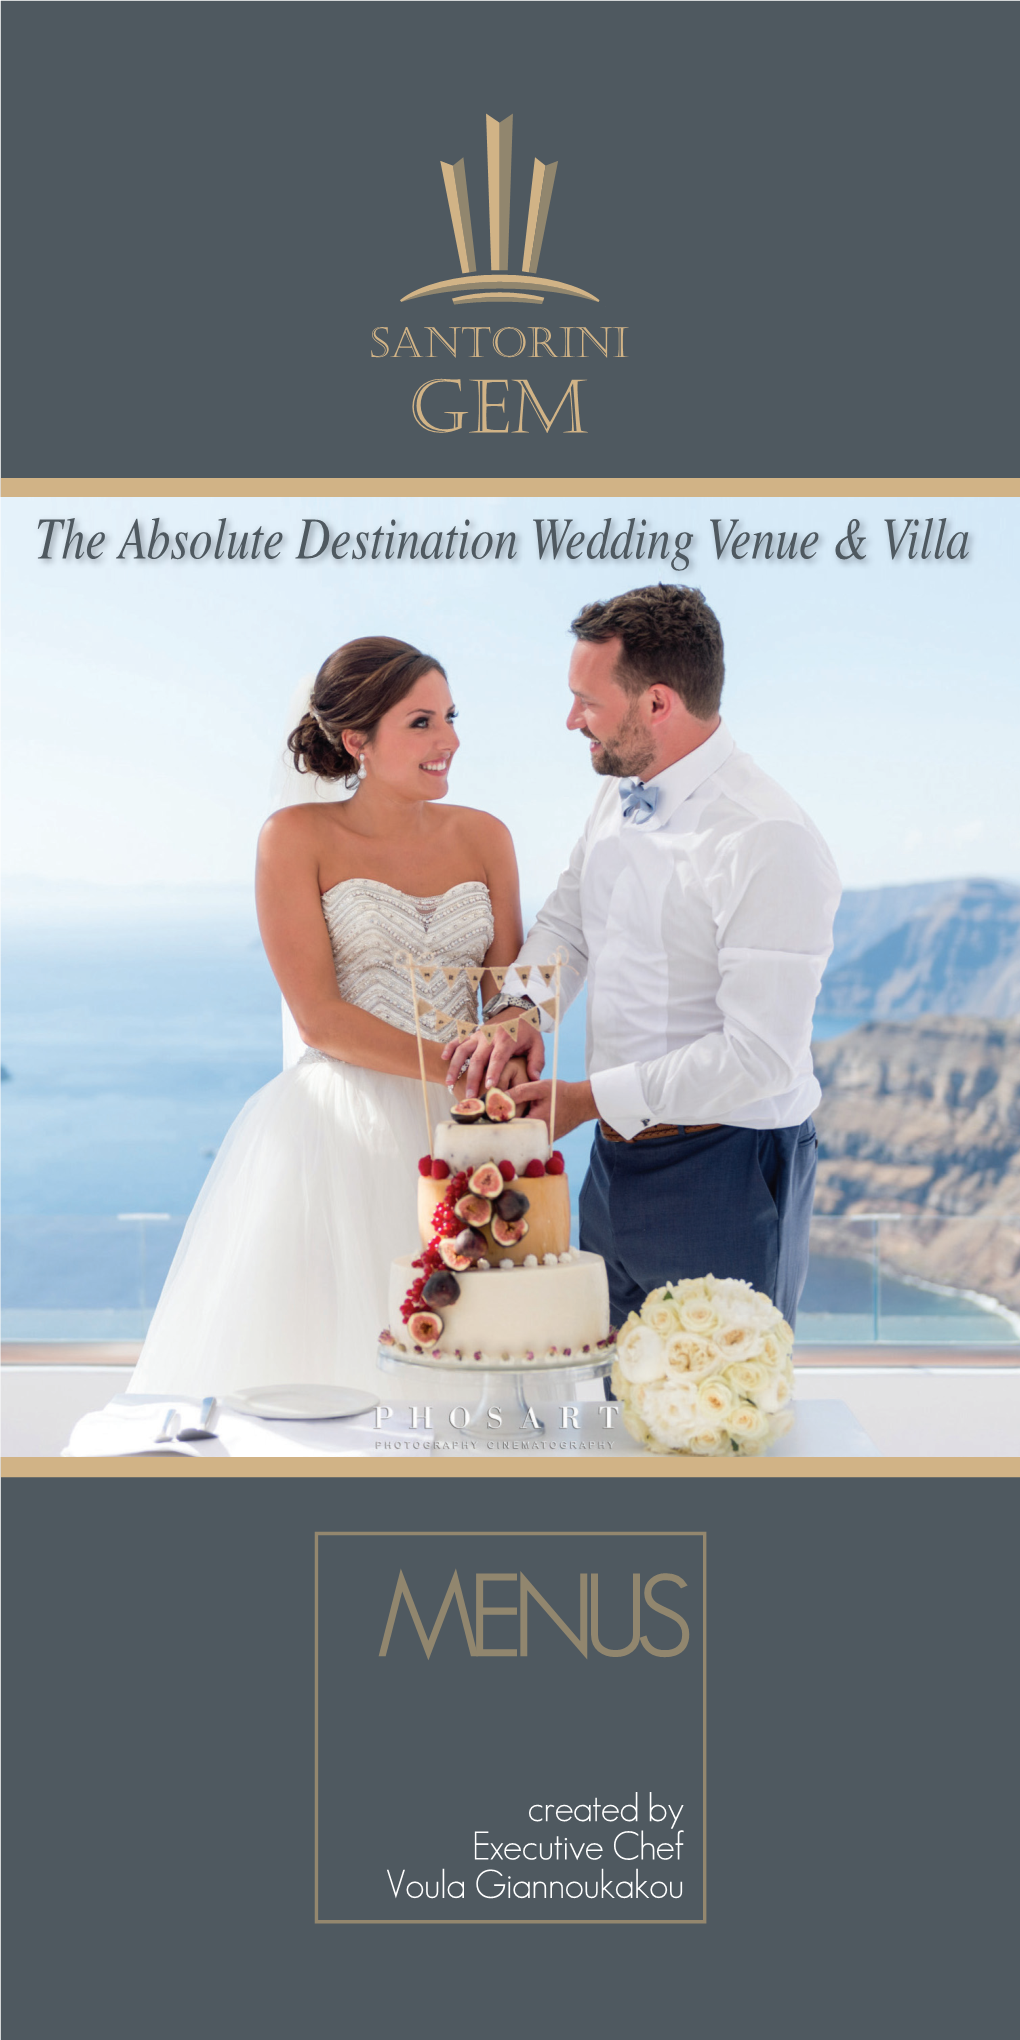 The Absolute Destination Wedding Venue & Villa